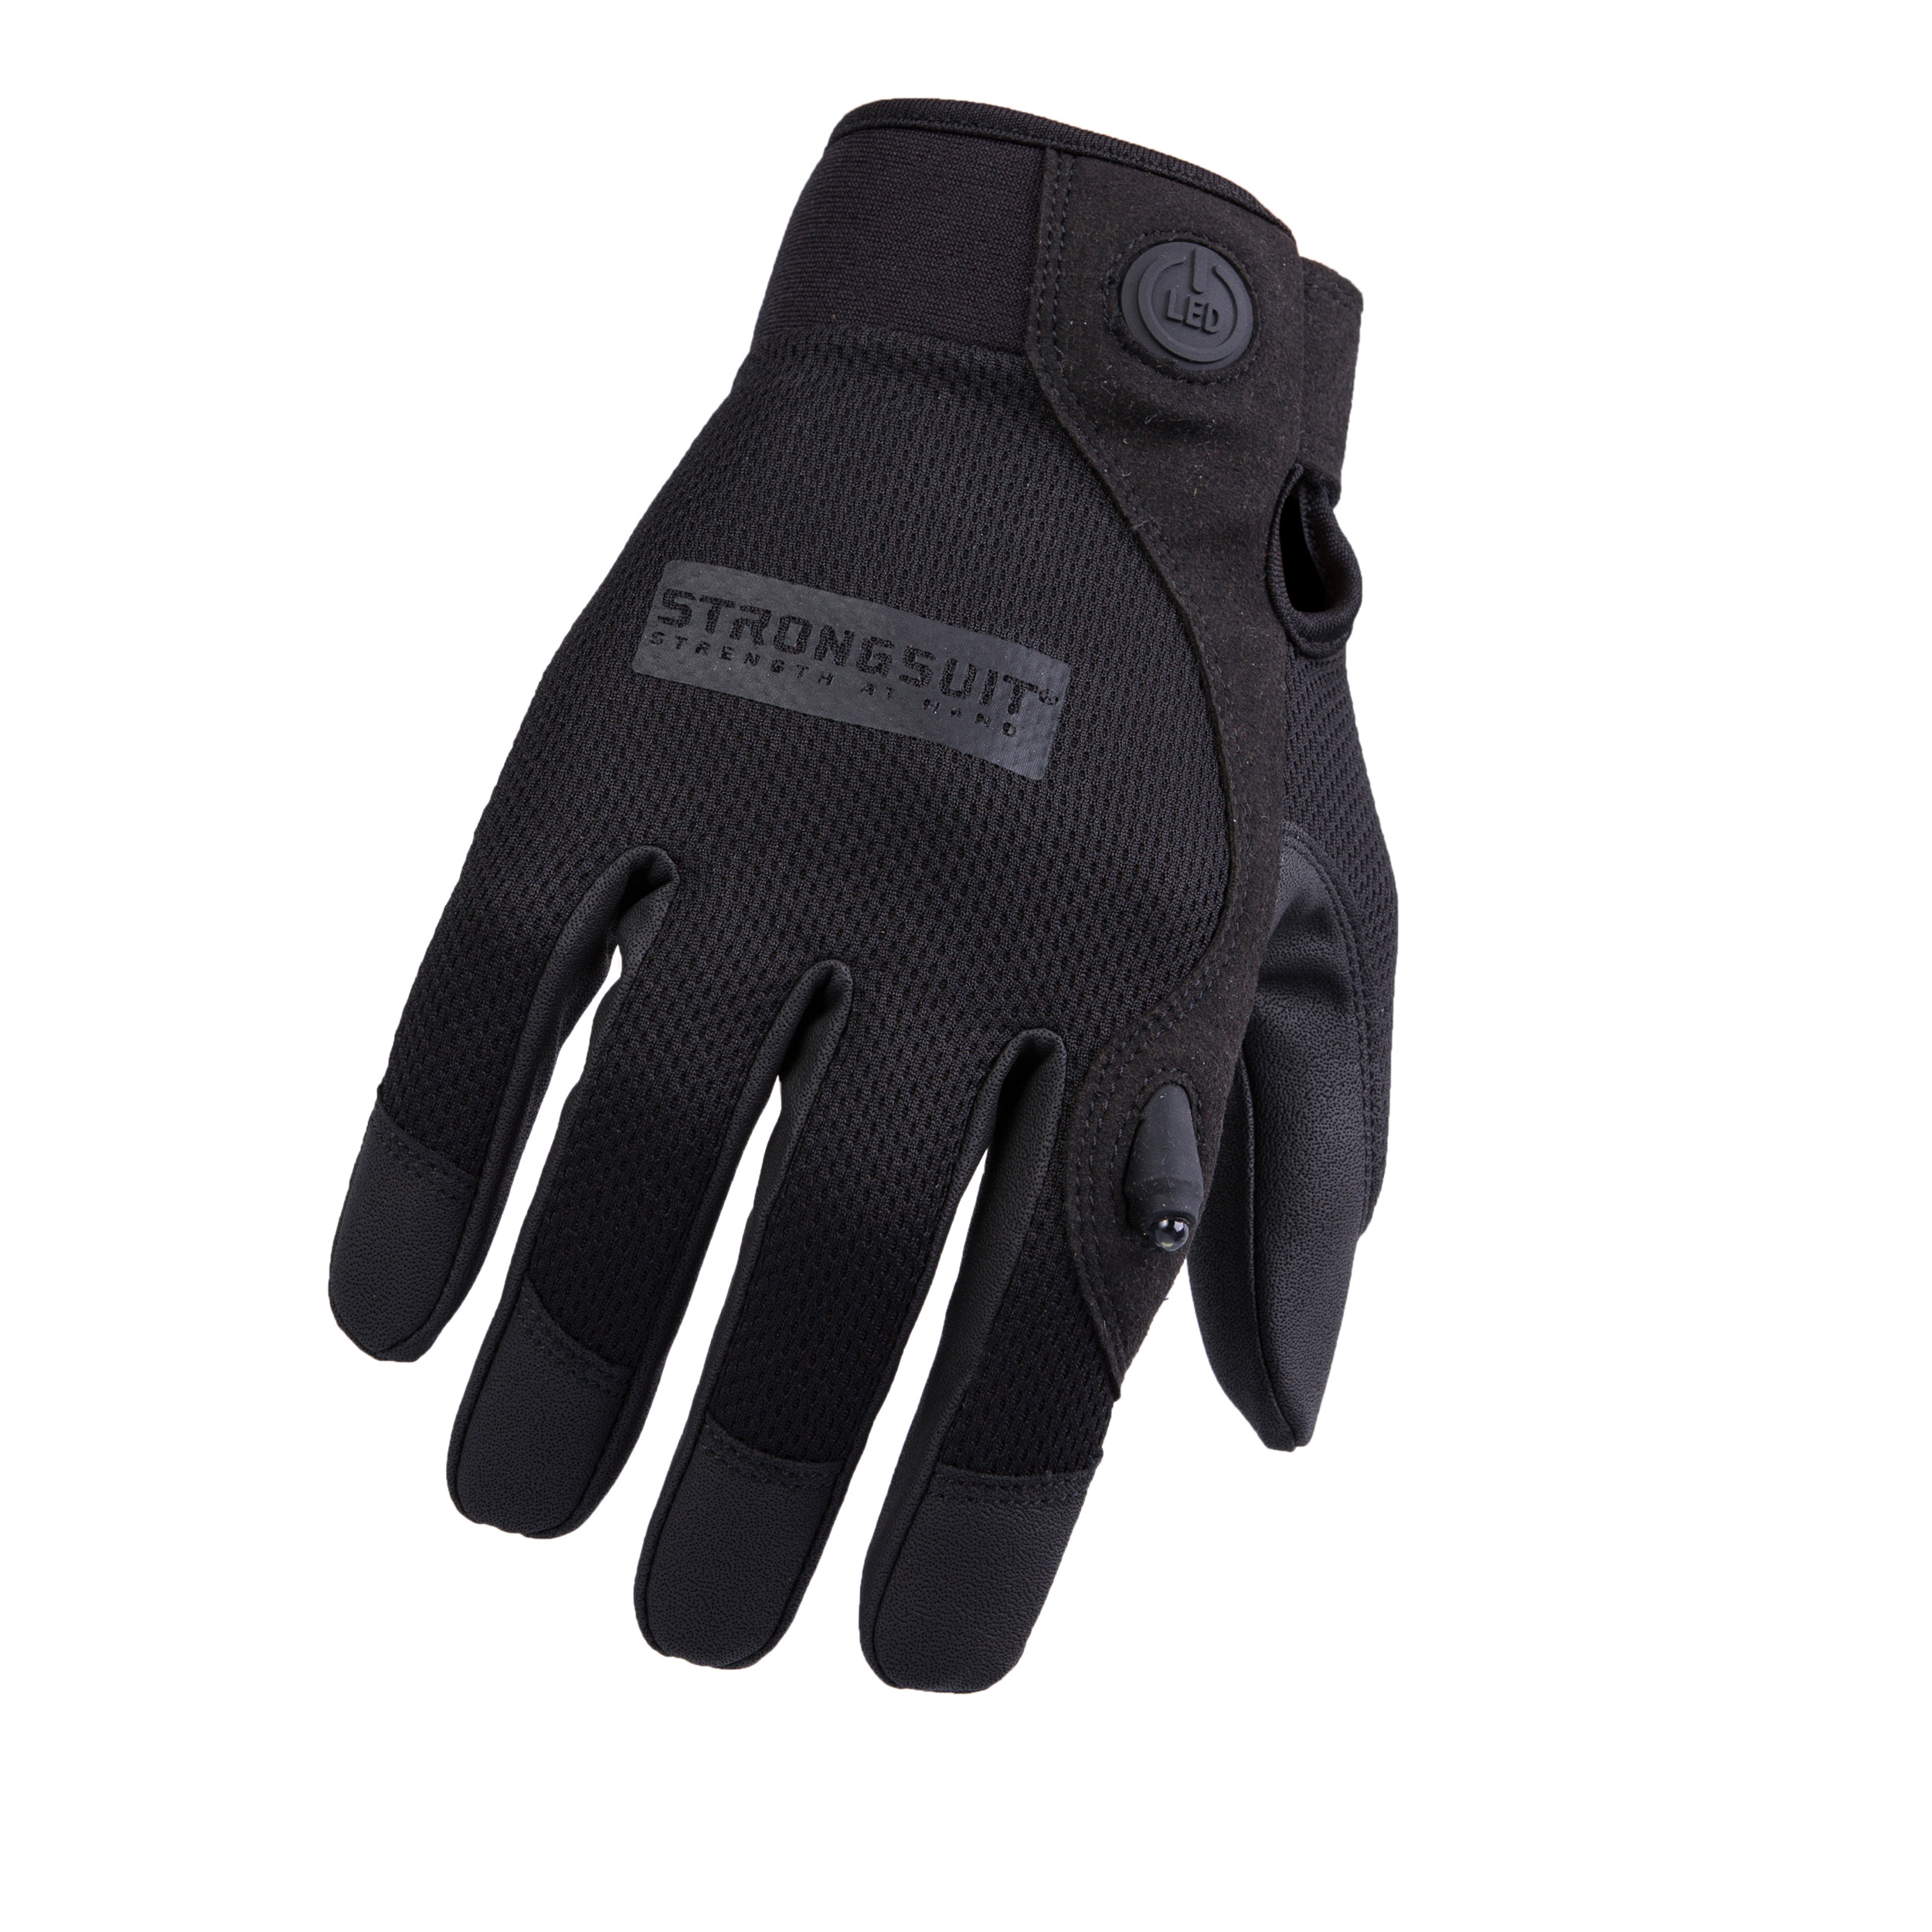 Second Skin Gloves Led Black Extra Large